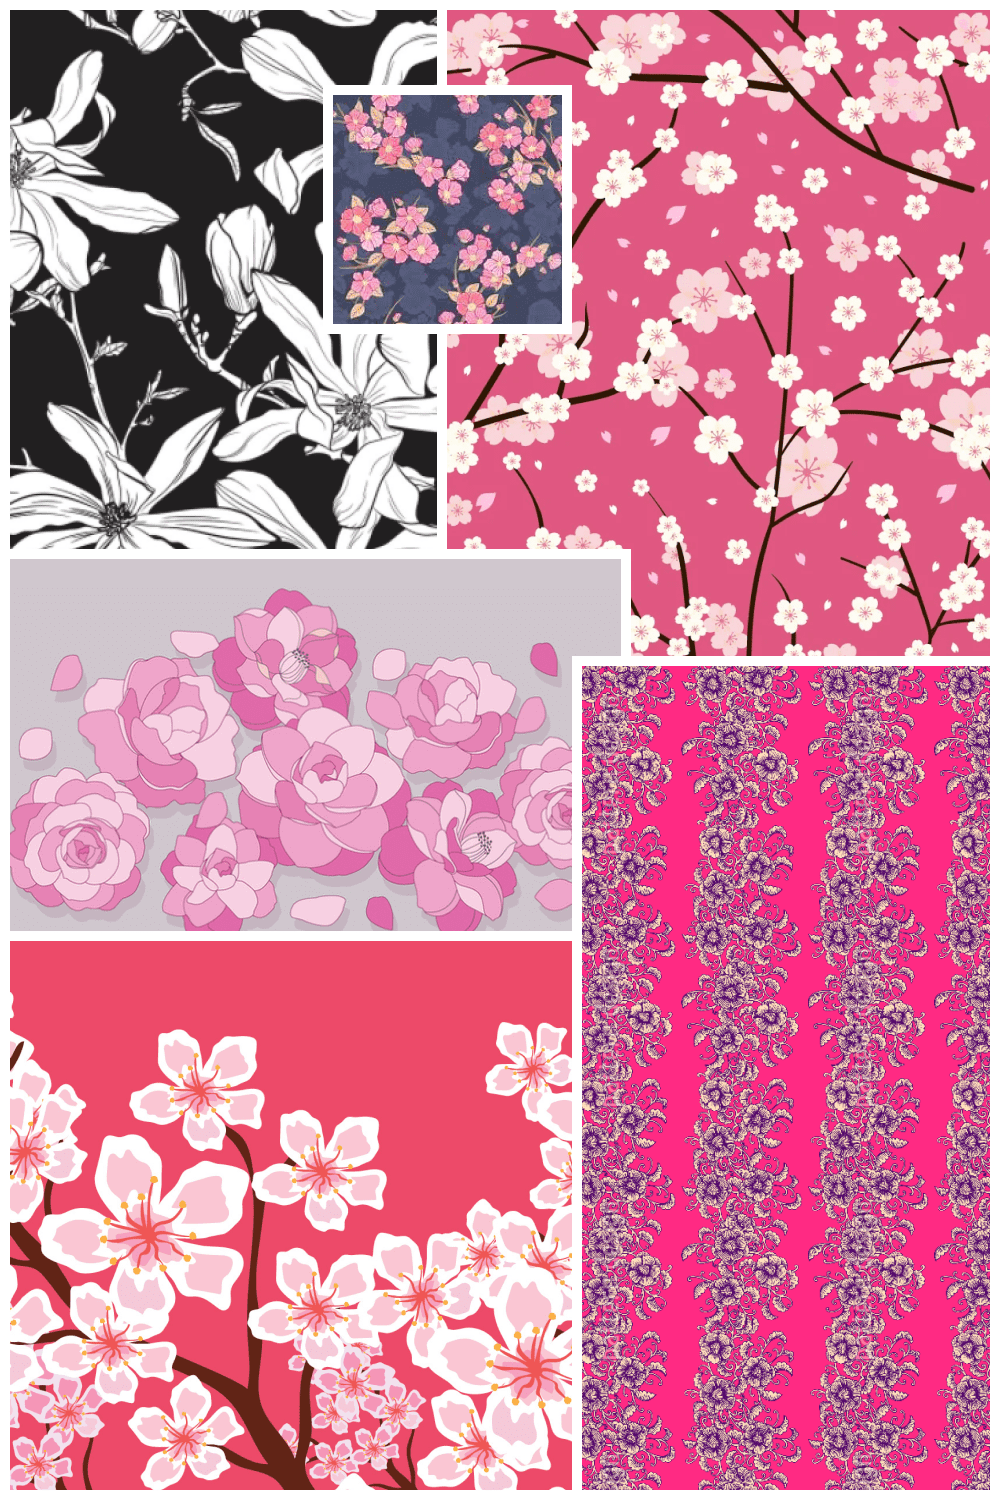 Japanese Flowers Patterns Pinterest.